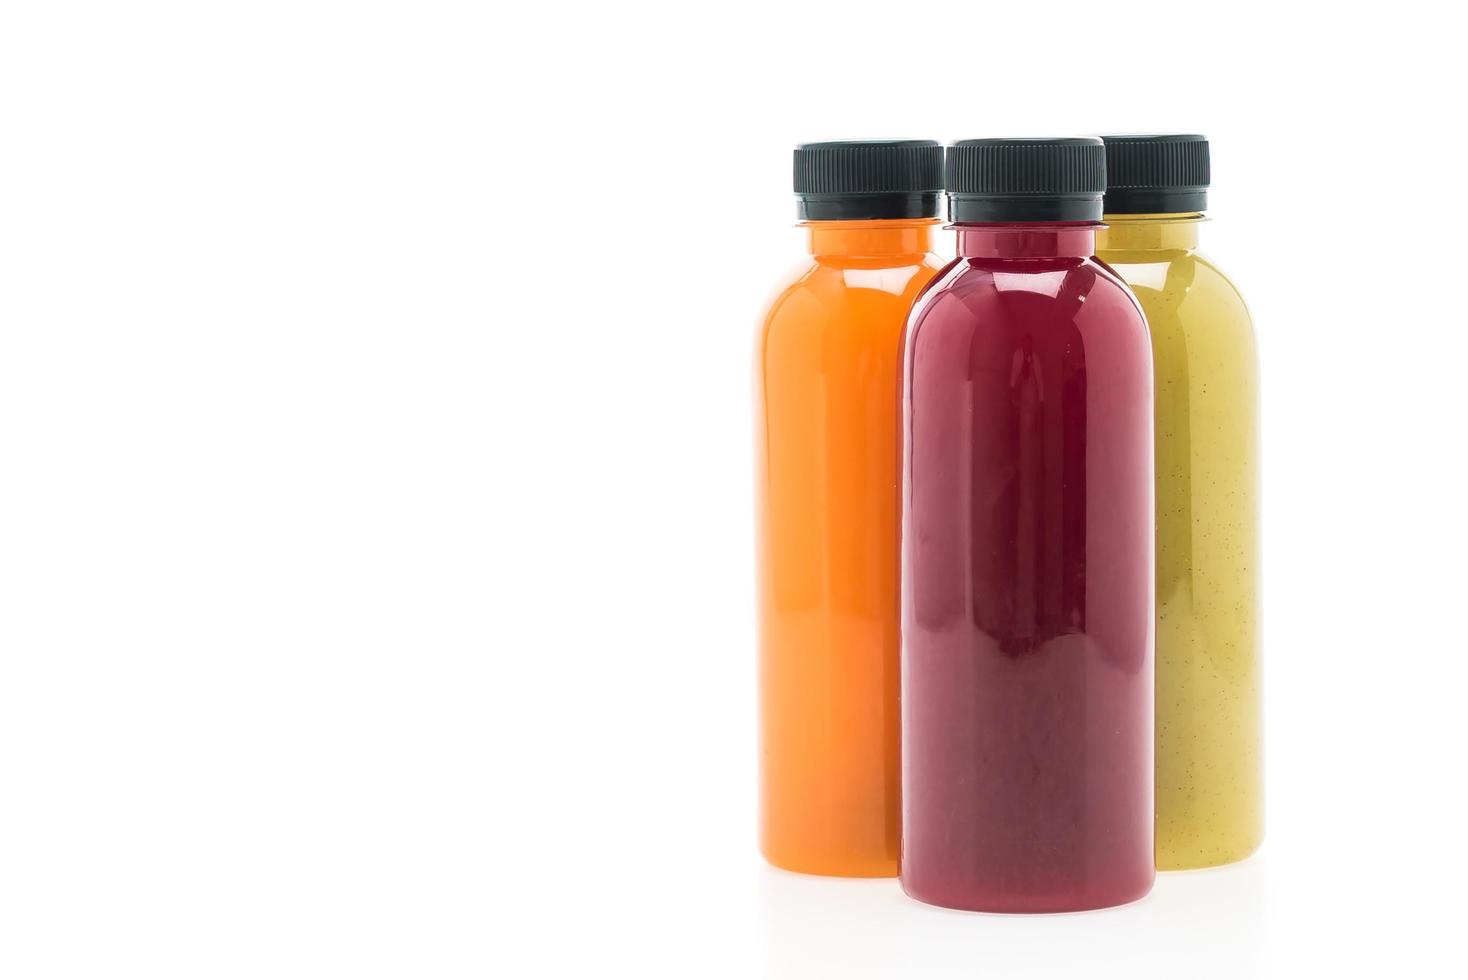 garrafas de suco de frutas e vegetais isoladas no fundo branco foto